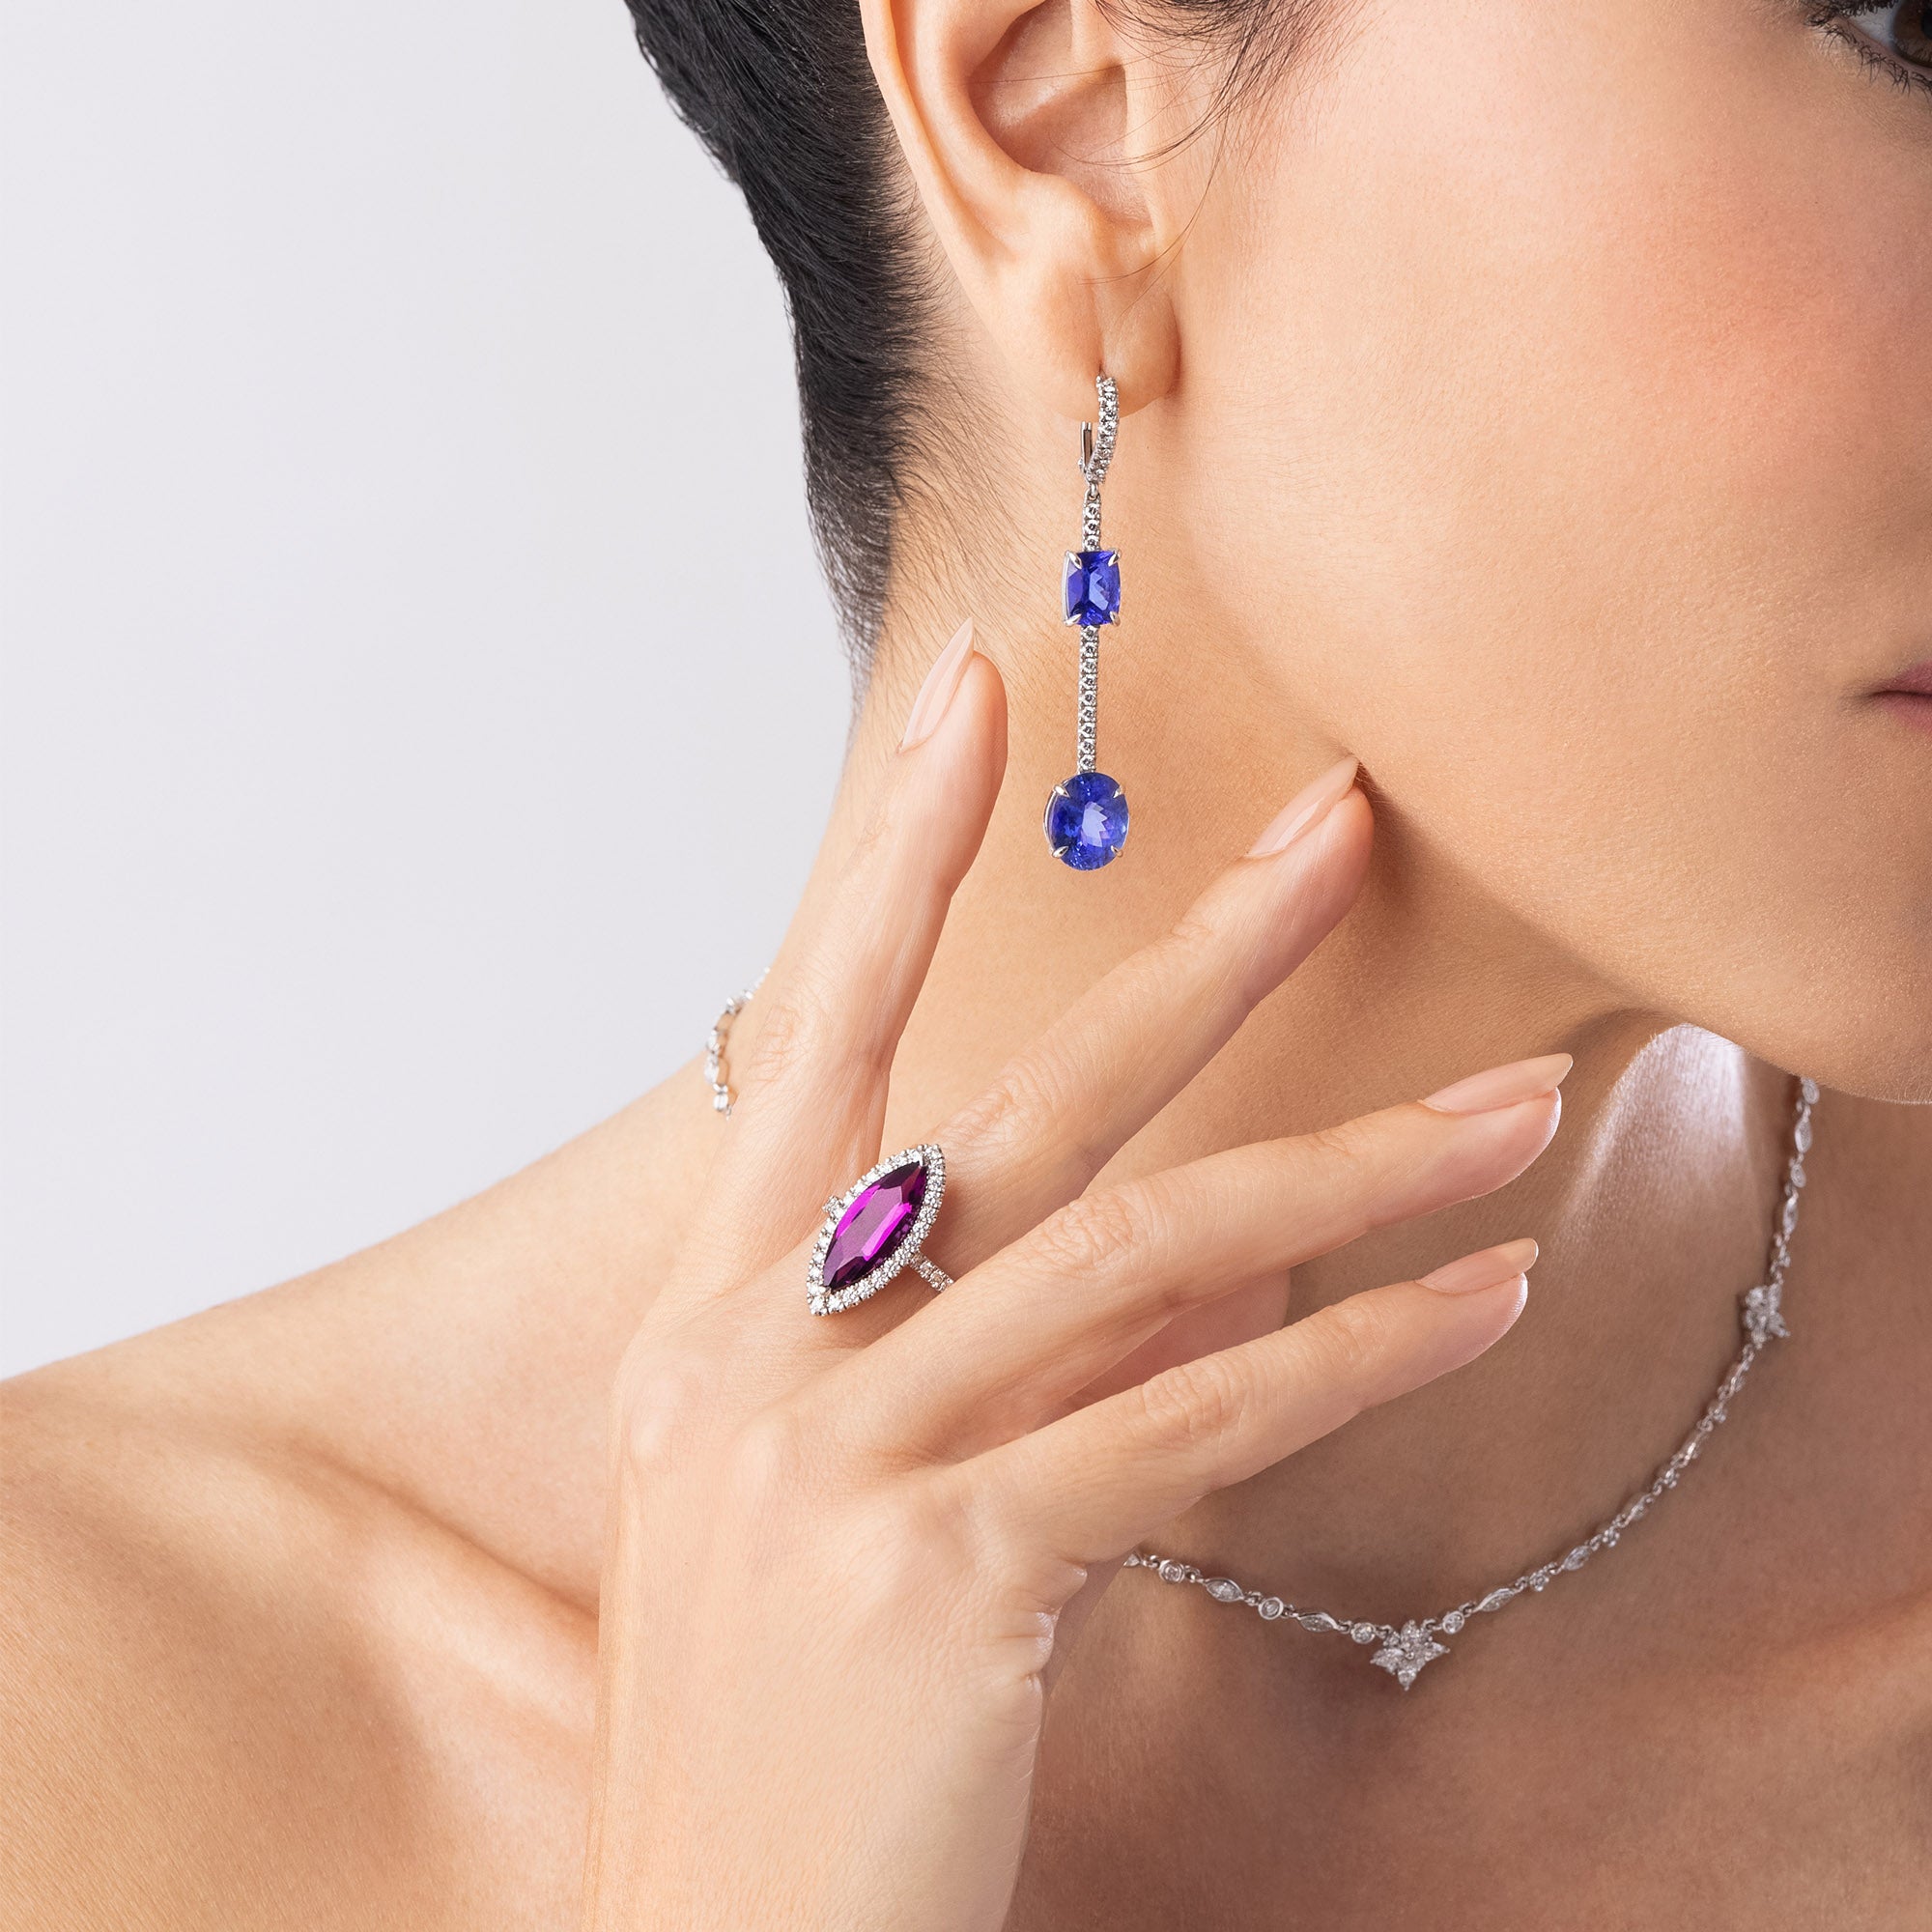 Asymmetric Tanzanite and Diamond Earrings by Lisa Nik